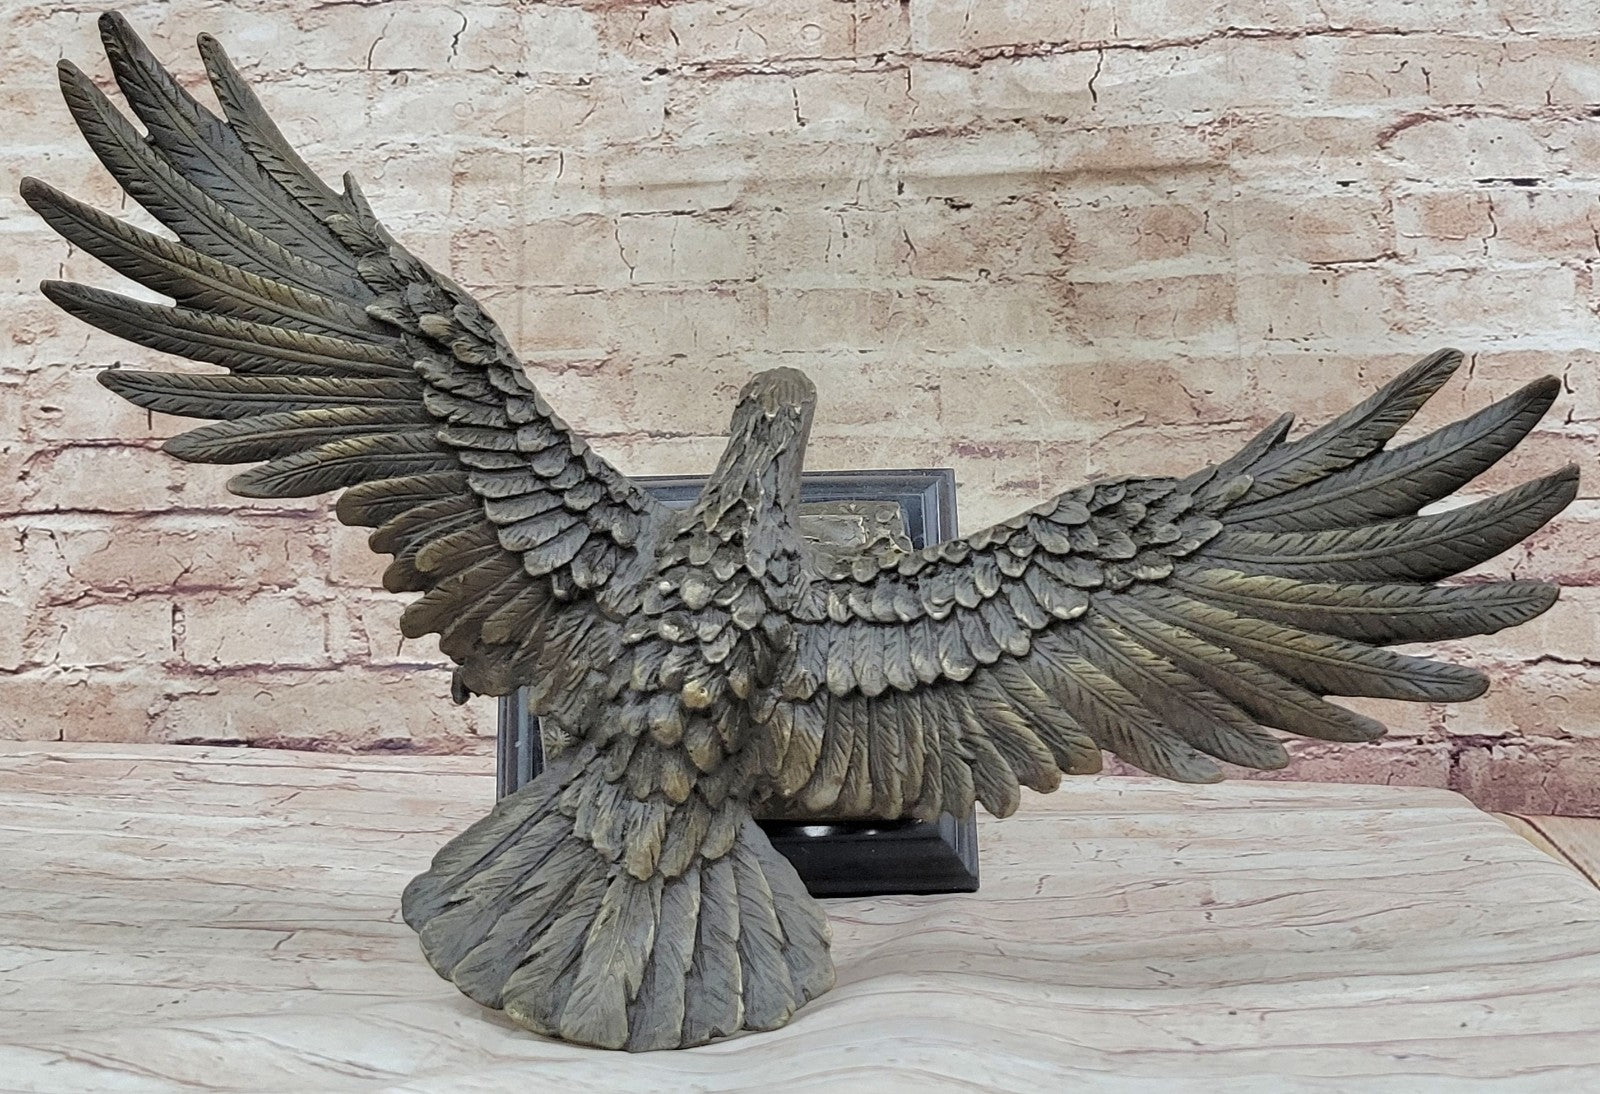 American Bald Eagle in Flight Bronze Sculpture on Marble Base Original 16" x 18"